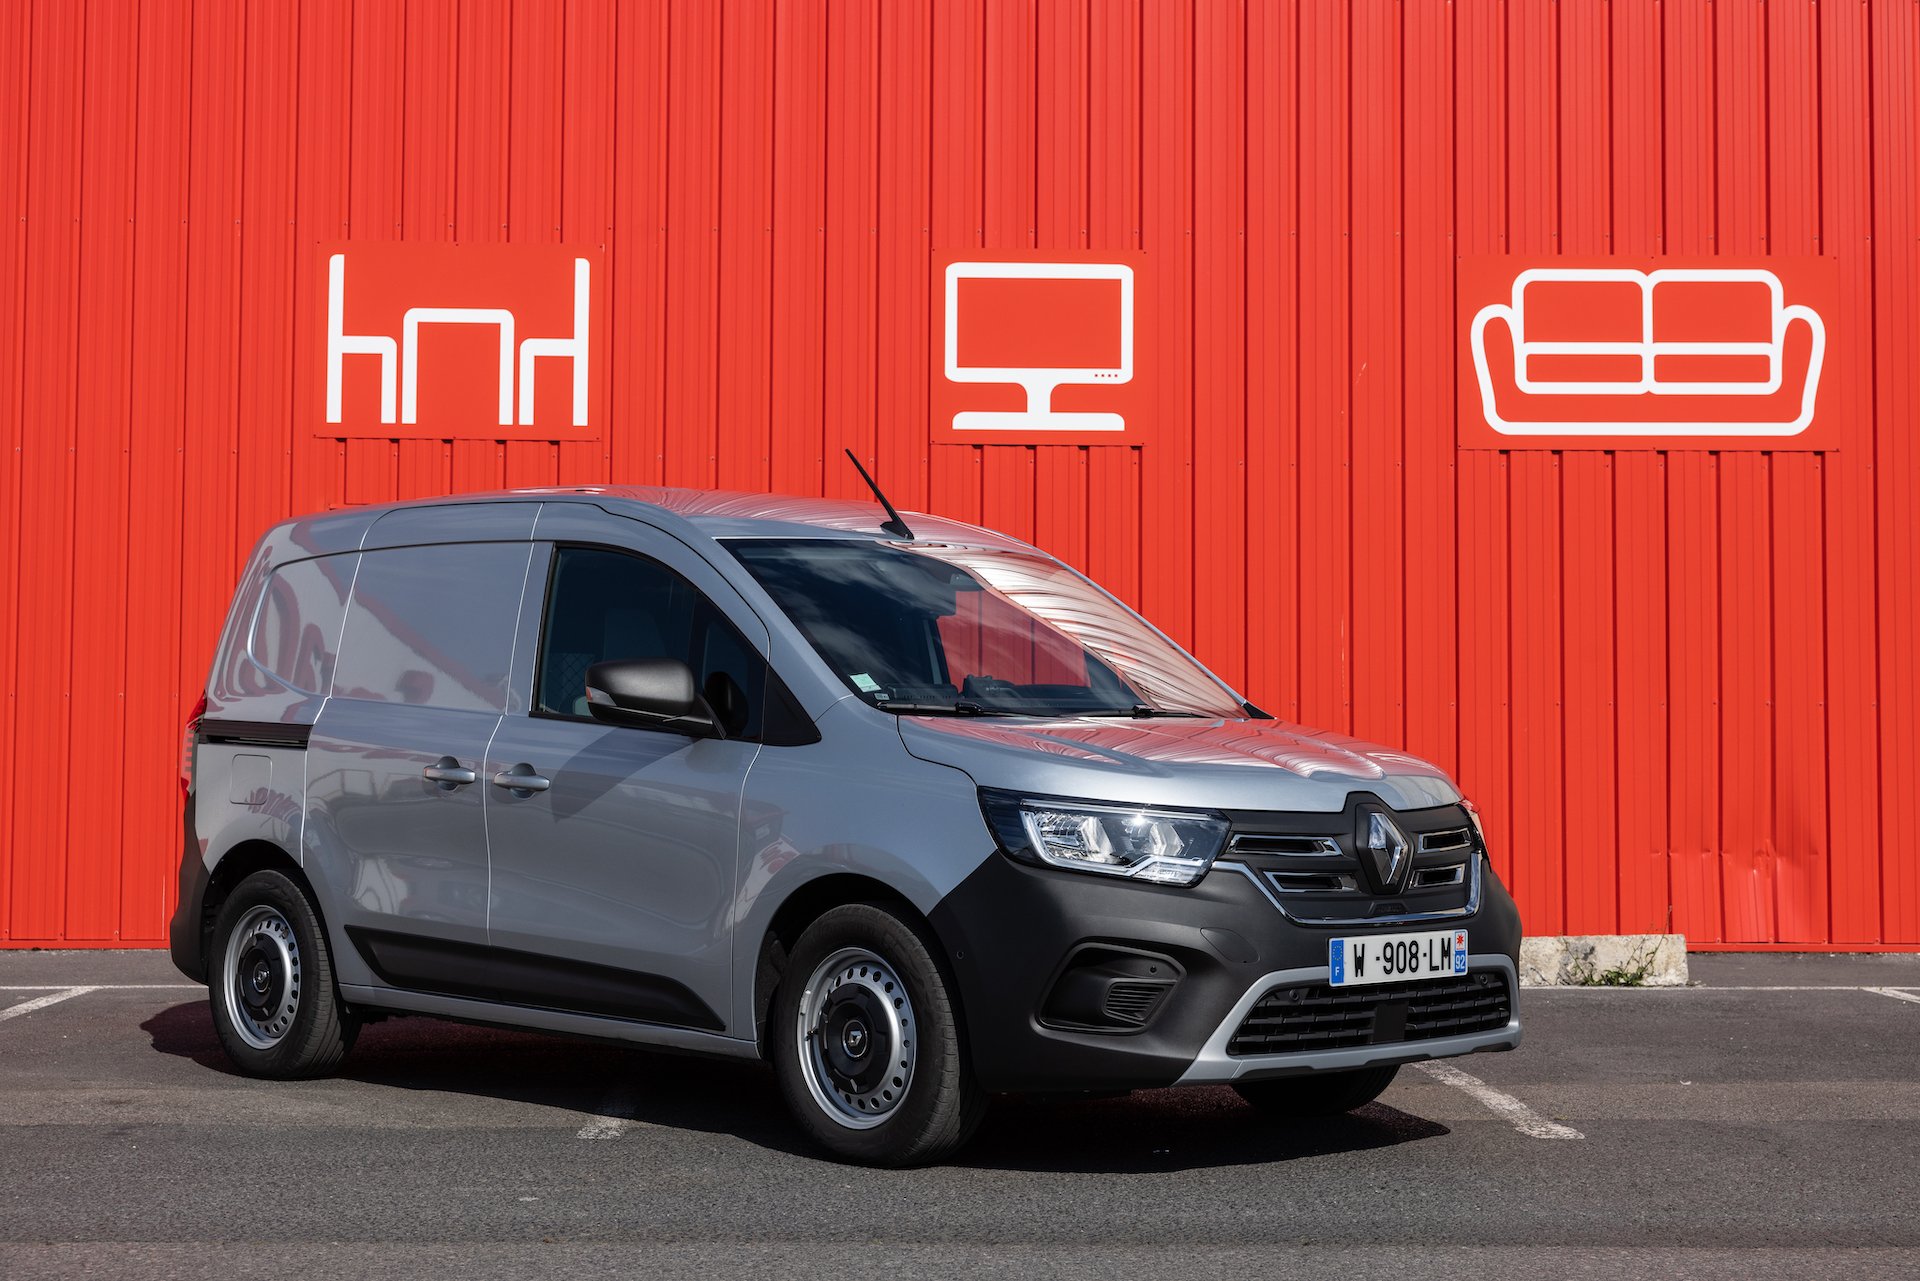 wraak Vegen Bederven Used Renault Vans for sale | AutoTrader Vans